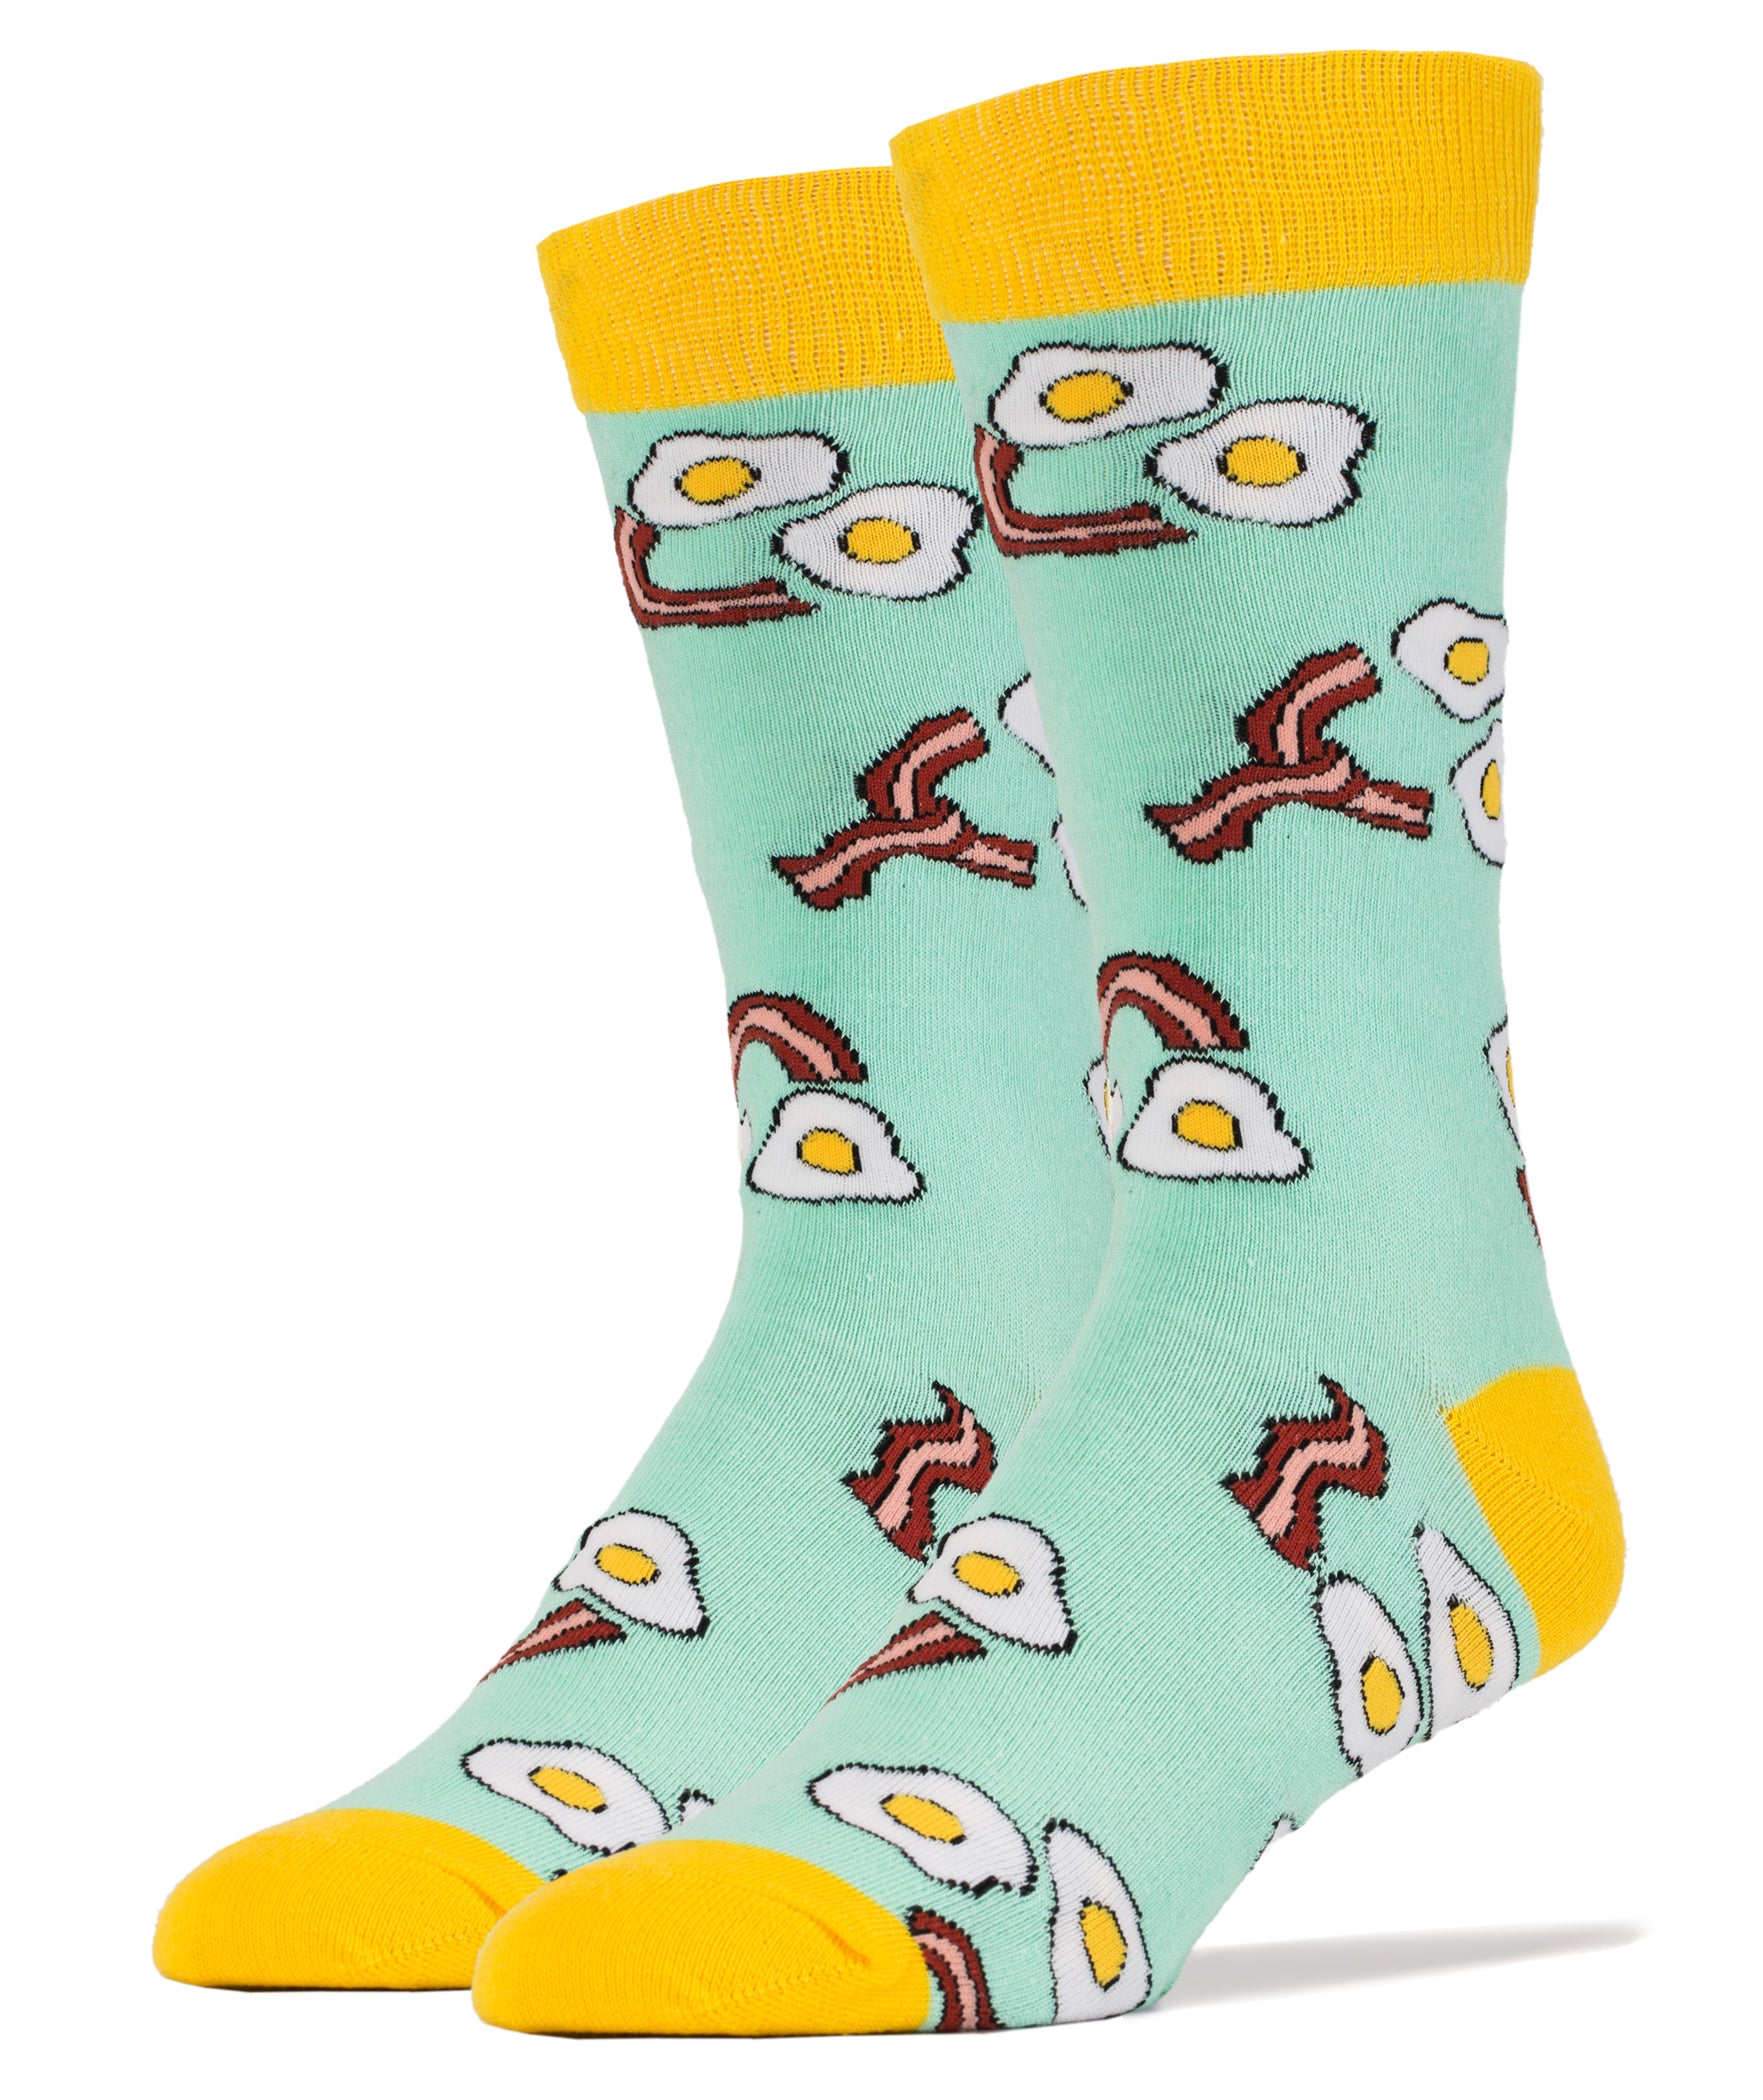 Happy Breakfast Socks | Food Crew Socks for Men